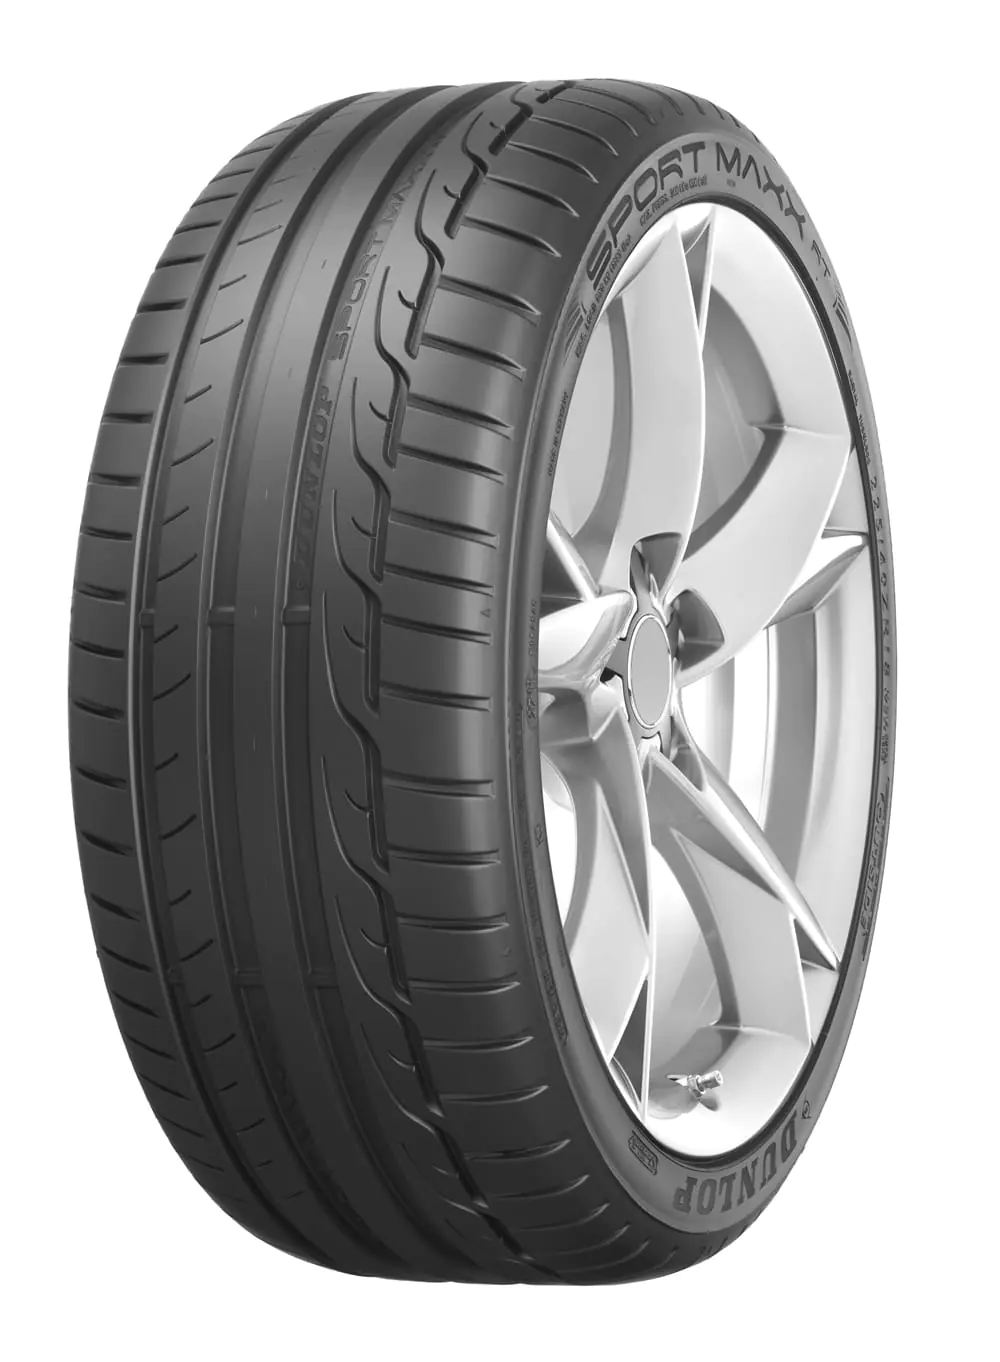 Dunlop Dunlop 205/45 R16 83W SP.MAXX RT MFS pneumatici nuovi Estivo 